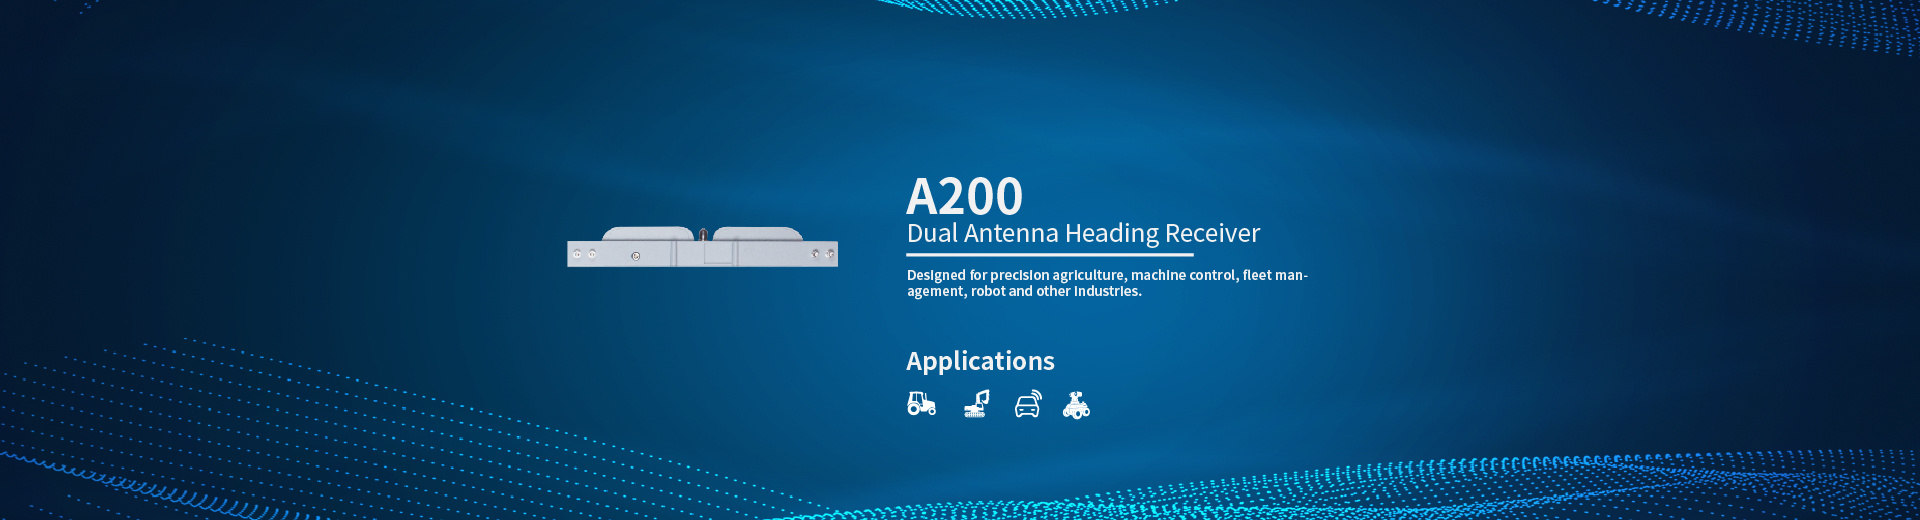 A200 Dual Antenna Heading Receiver